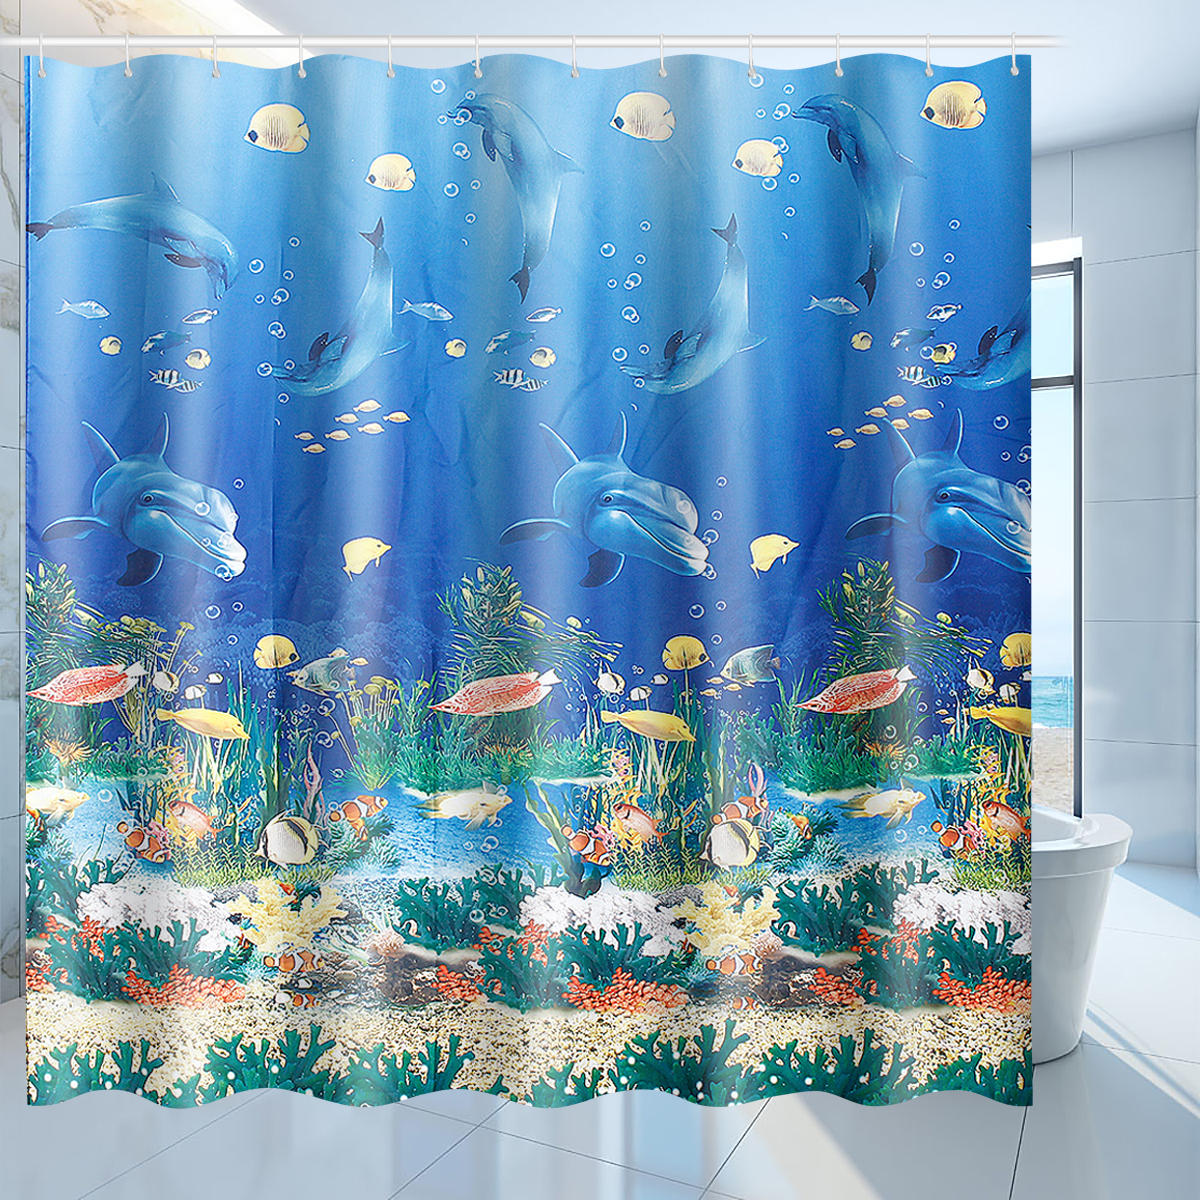 180x180cm Waterproof Polyester Ocean Shower Curtain Bathroom Decor With 12 Hooks